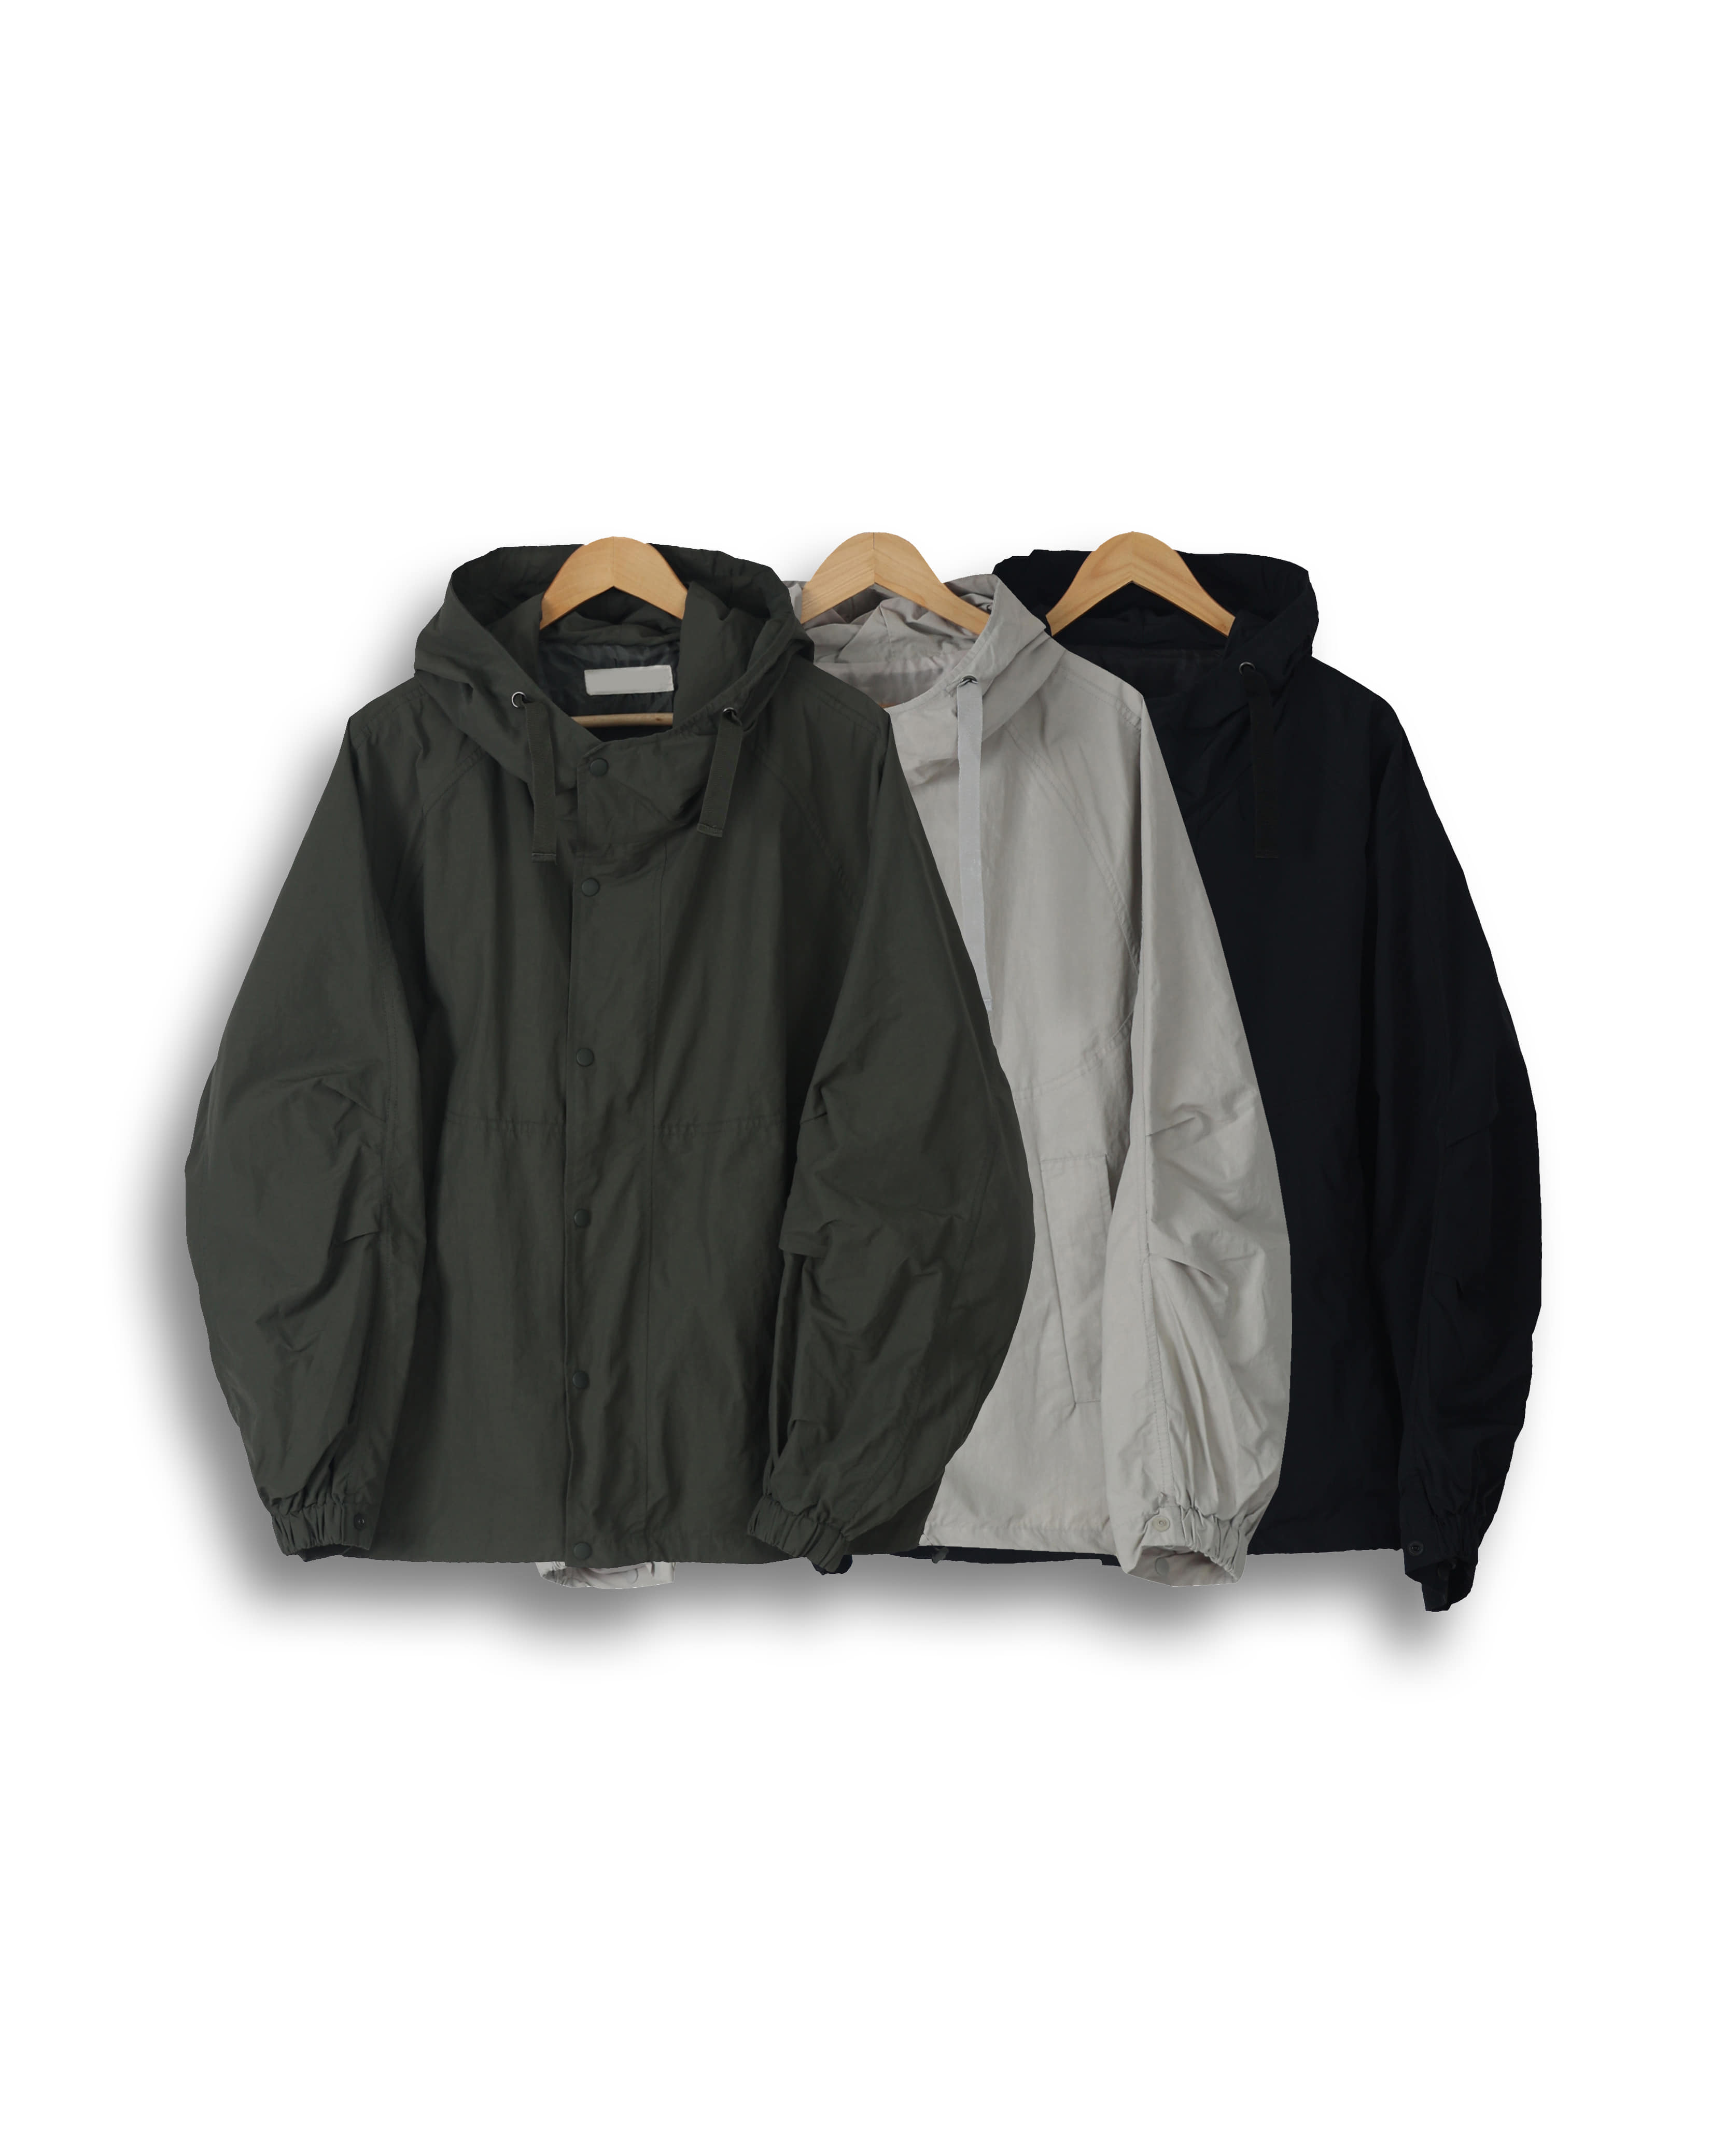 FARM Military Pleats Hoodied Jacket (Black/Khaki/Gray) - 5차 리오더 (3/31 배송예정)